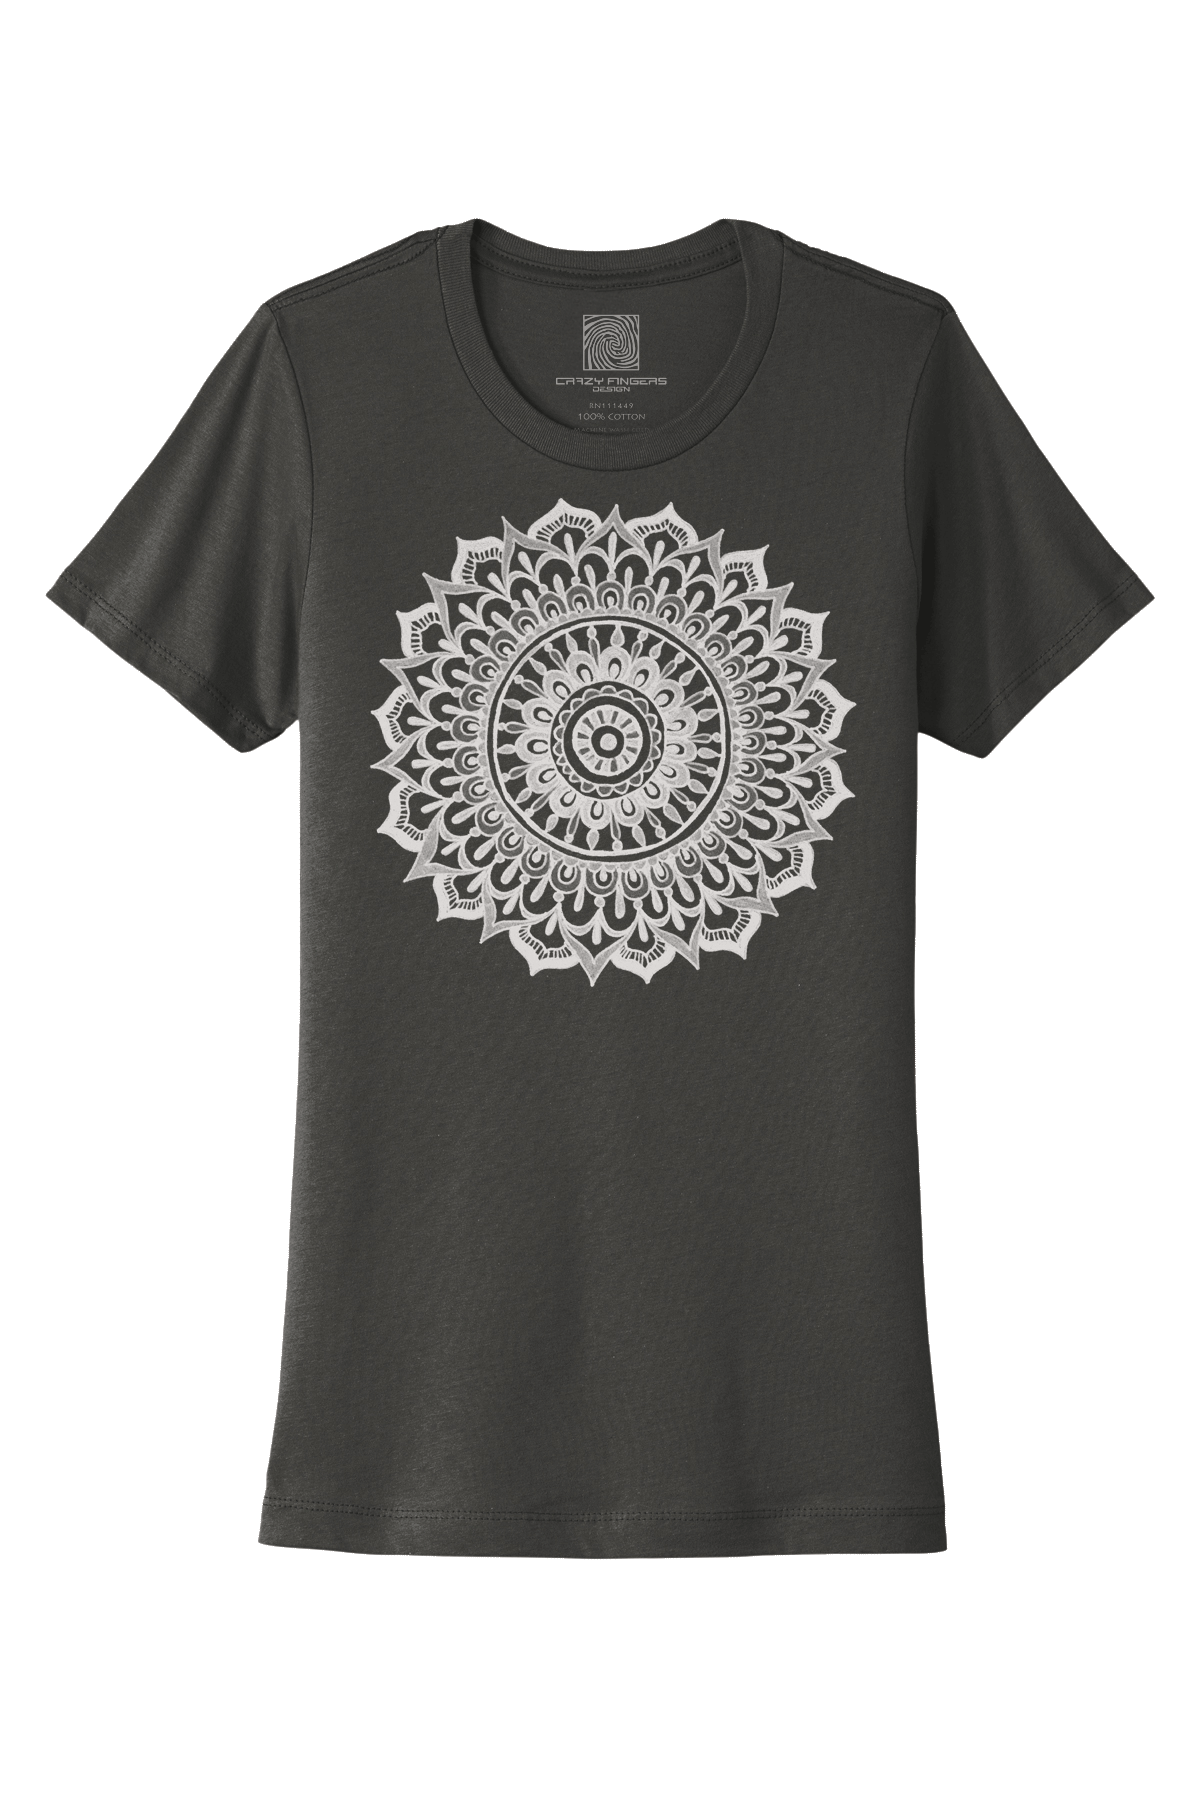 Lightweight Mandala Tee, 100% Cotton Short Sleeve Fitted Women's T-Shirt, Henna Lotus Design